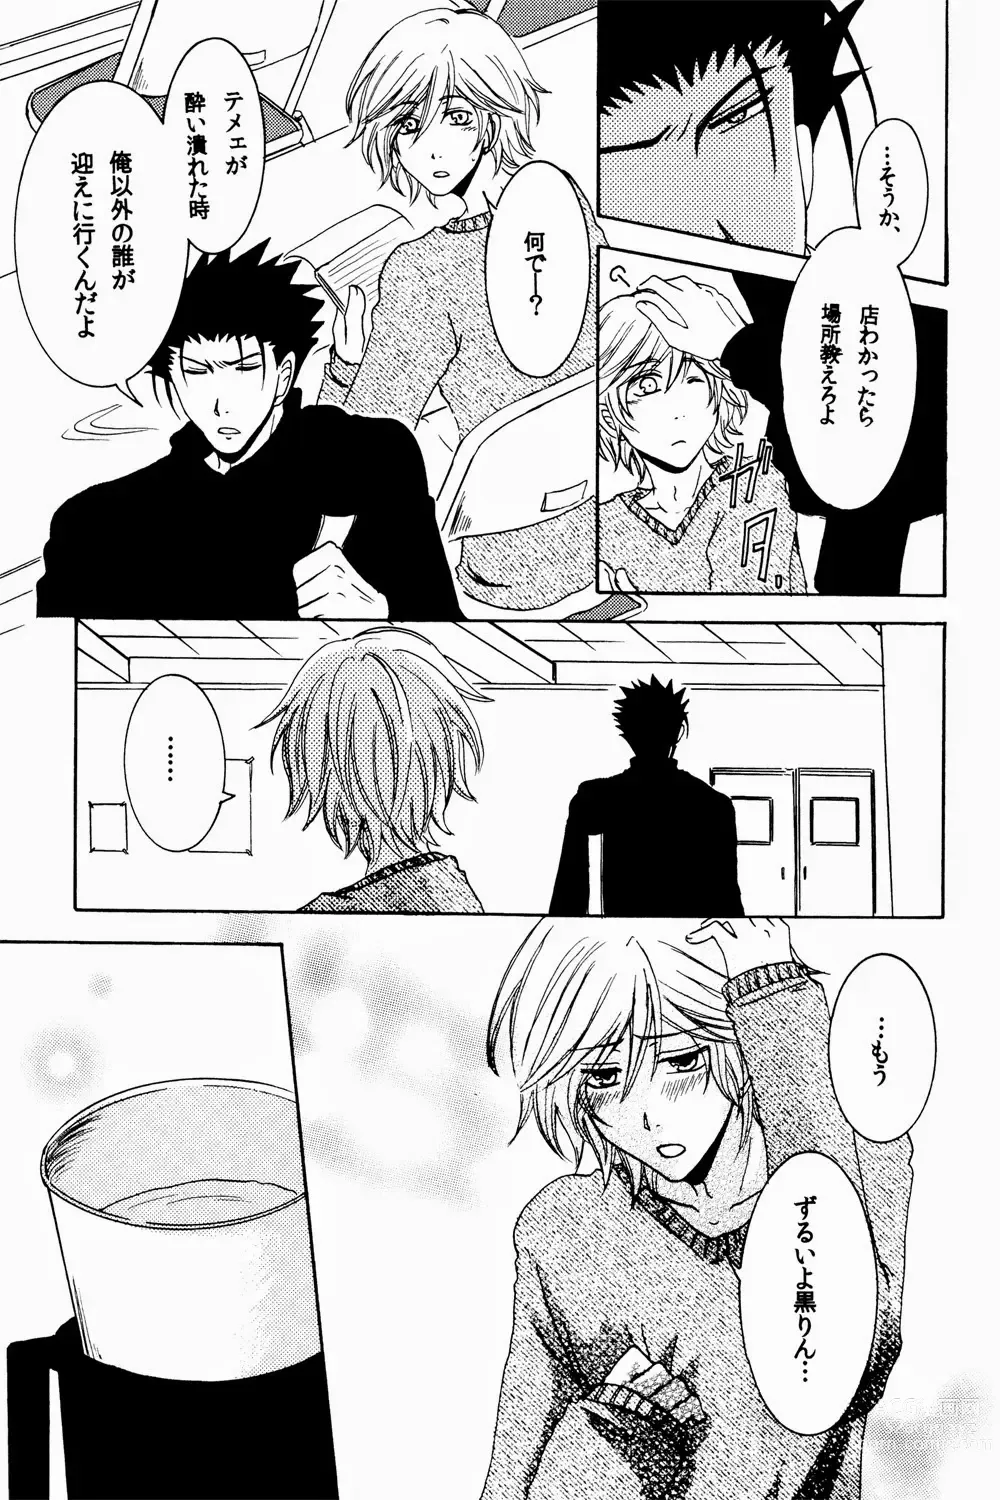 Page 6 of doujinshi New Year wa Kimi no Bed de.